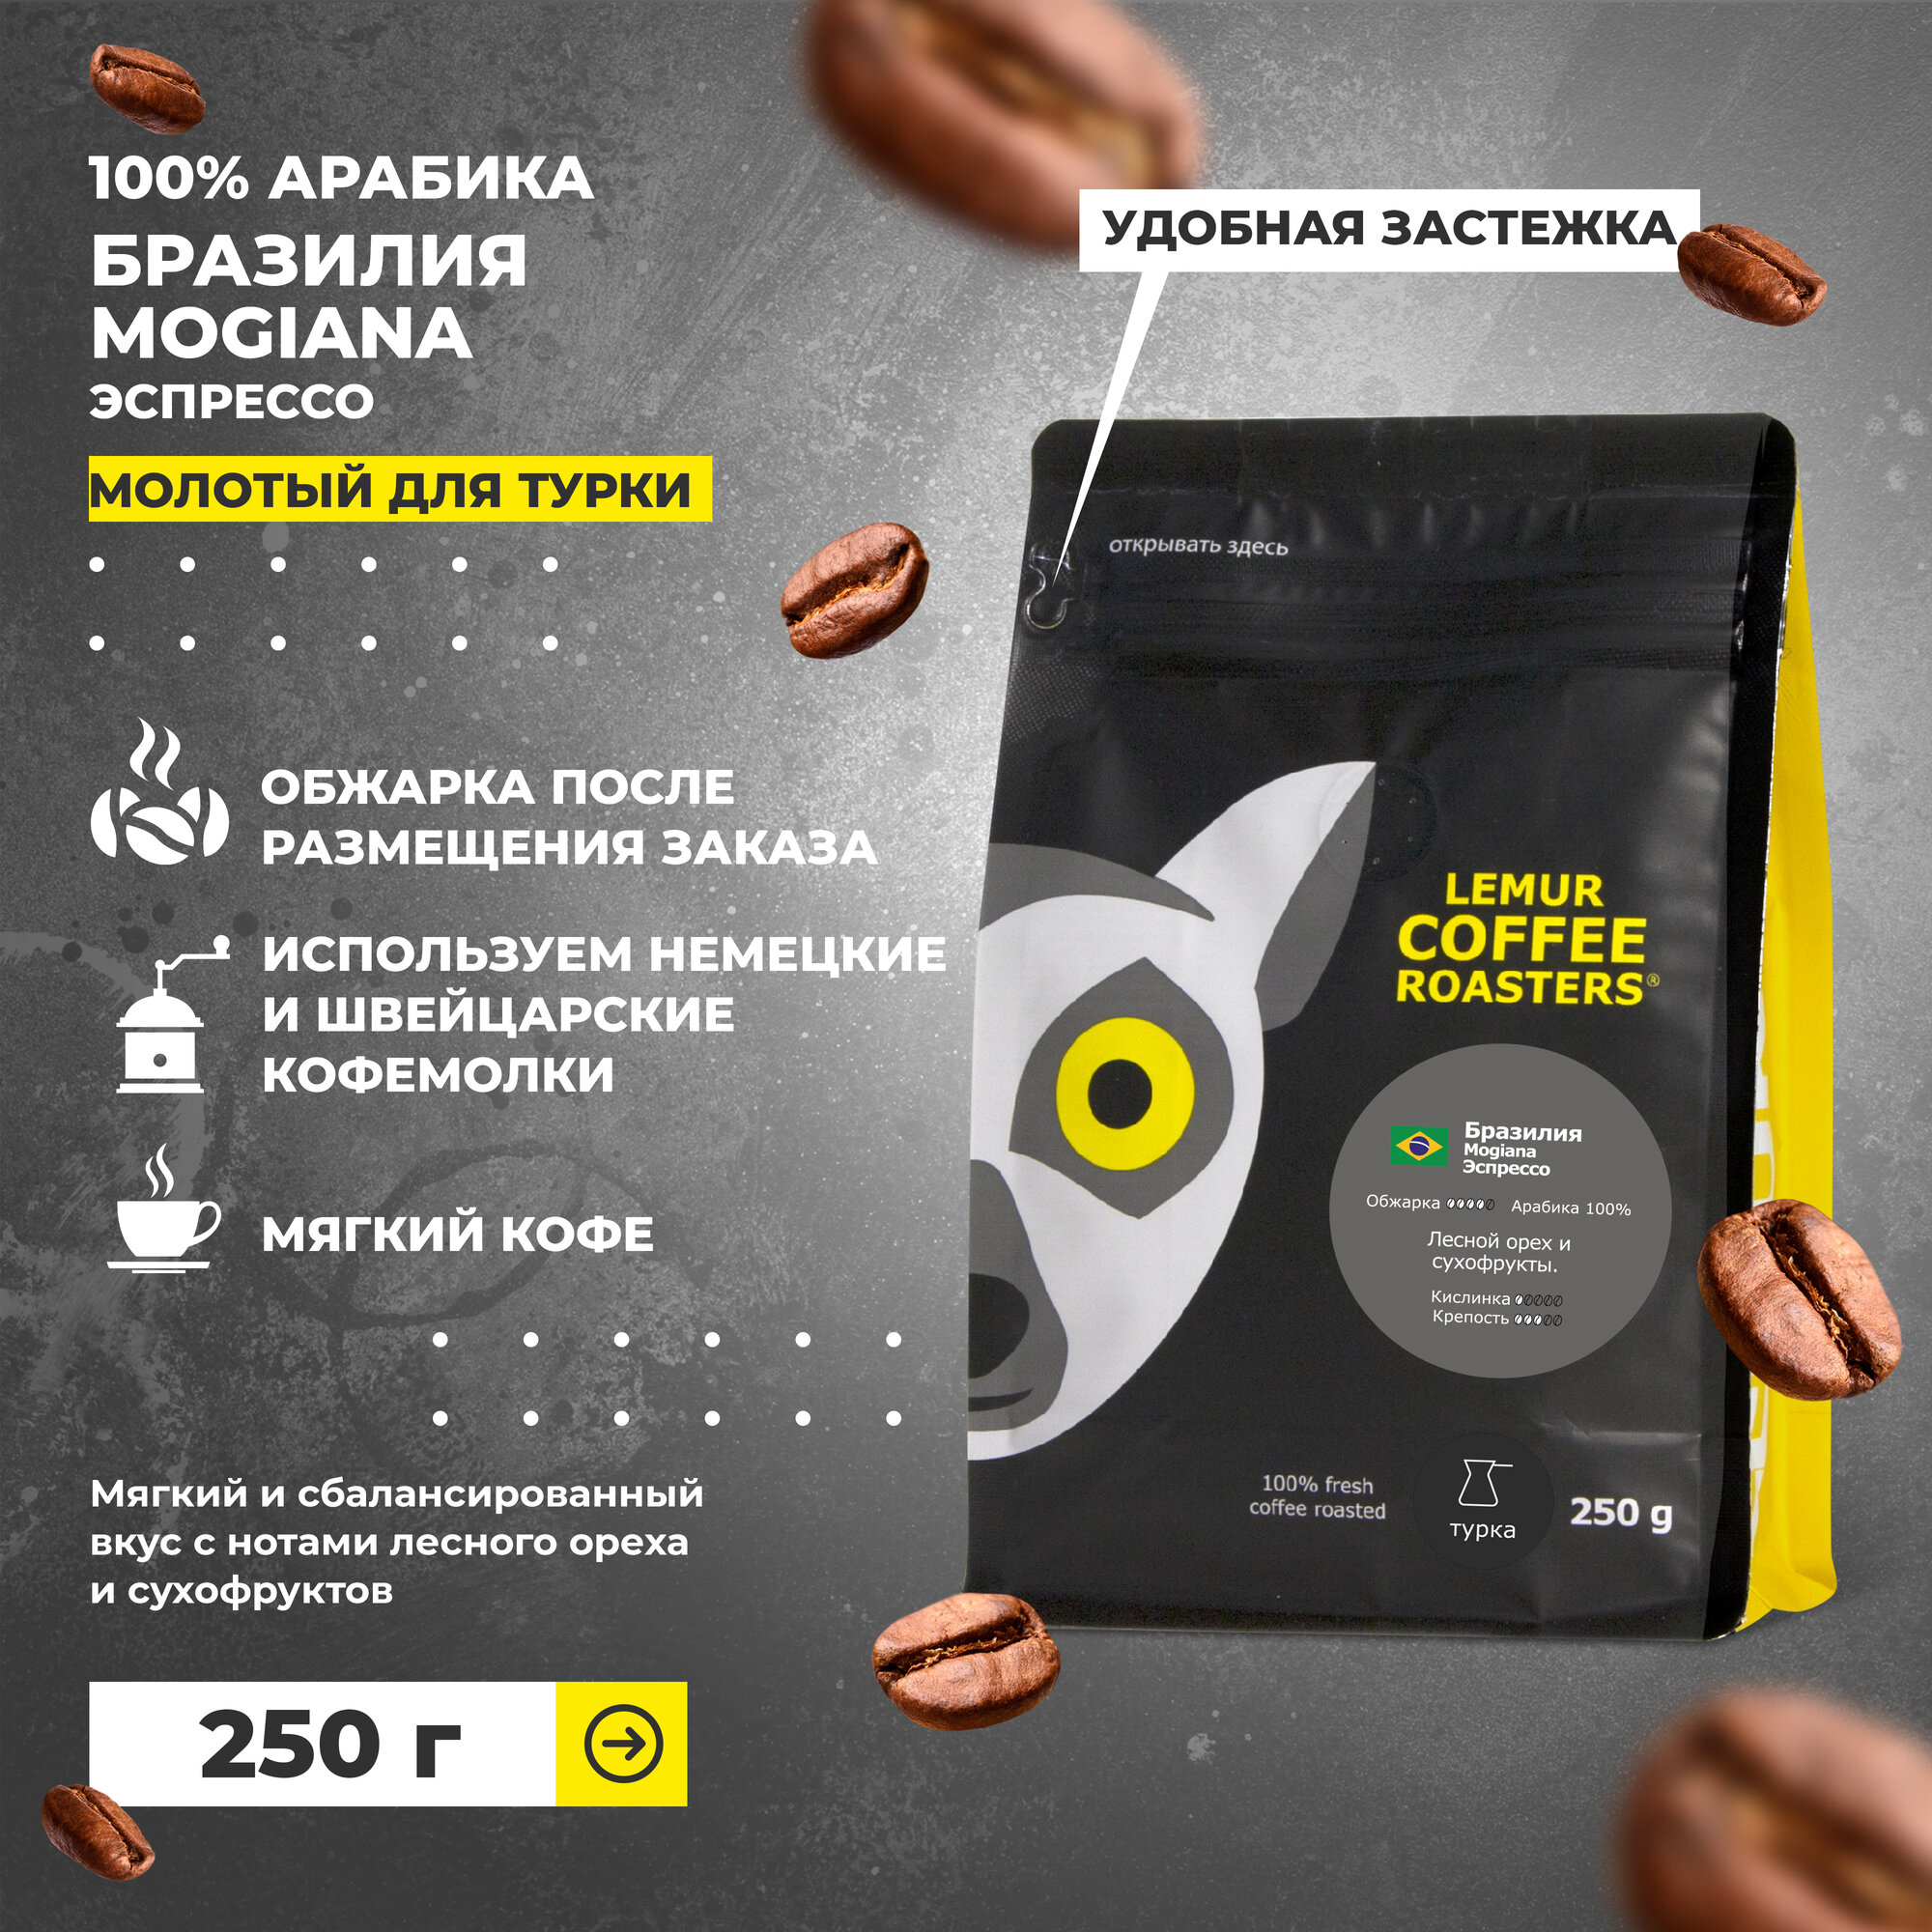 Свежеобжаренный кофе молотый Бразилия Можиана Эспрессо / Mogiana Lemur Coffee Roasters, 250 г